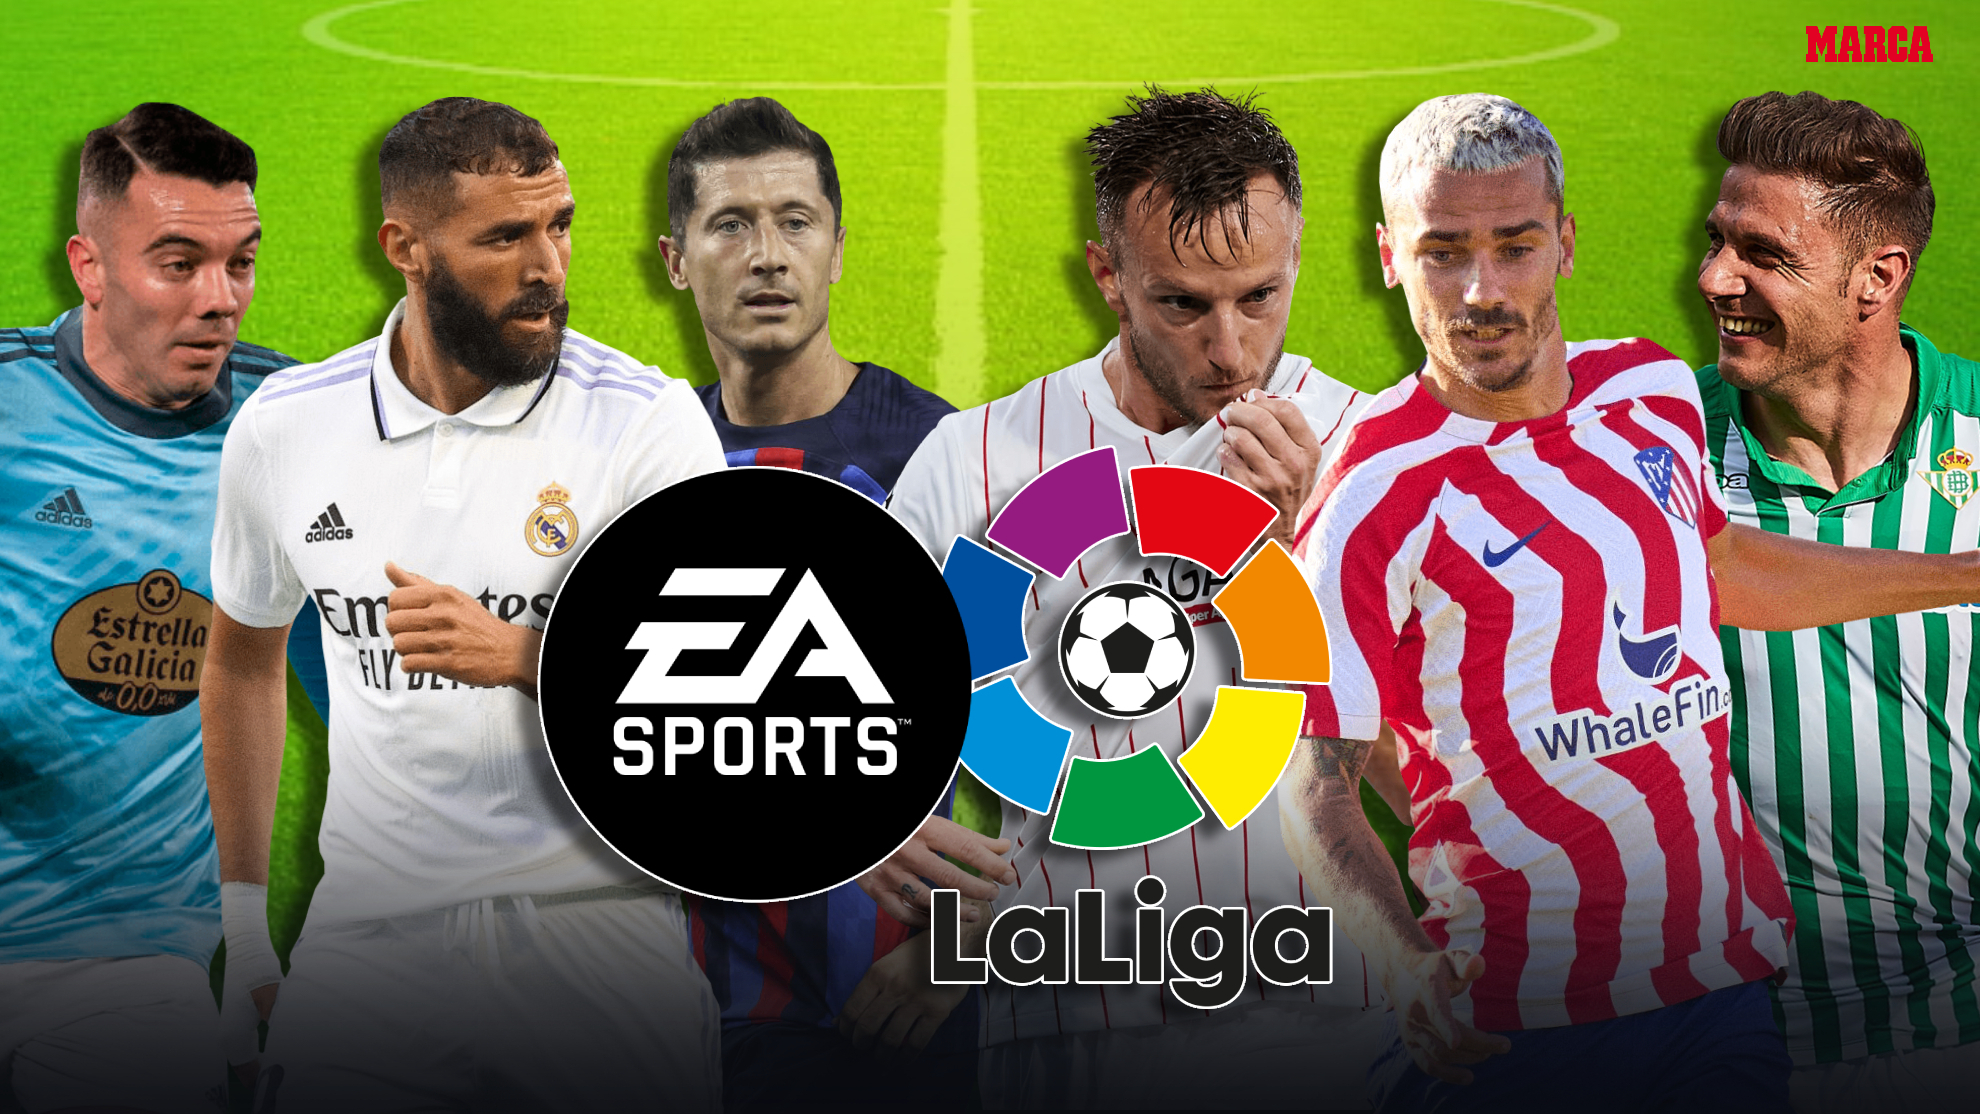 Exclusiva MARCA: EA Sports dar nombre a LaLiga